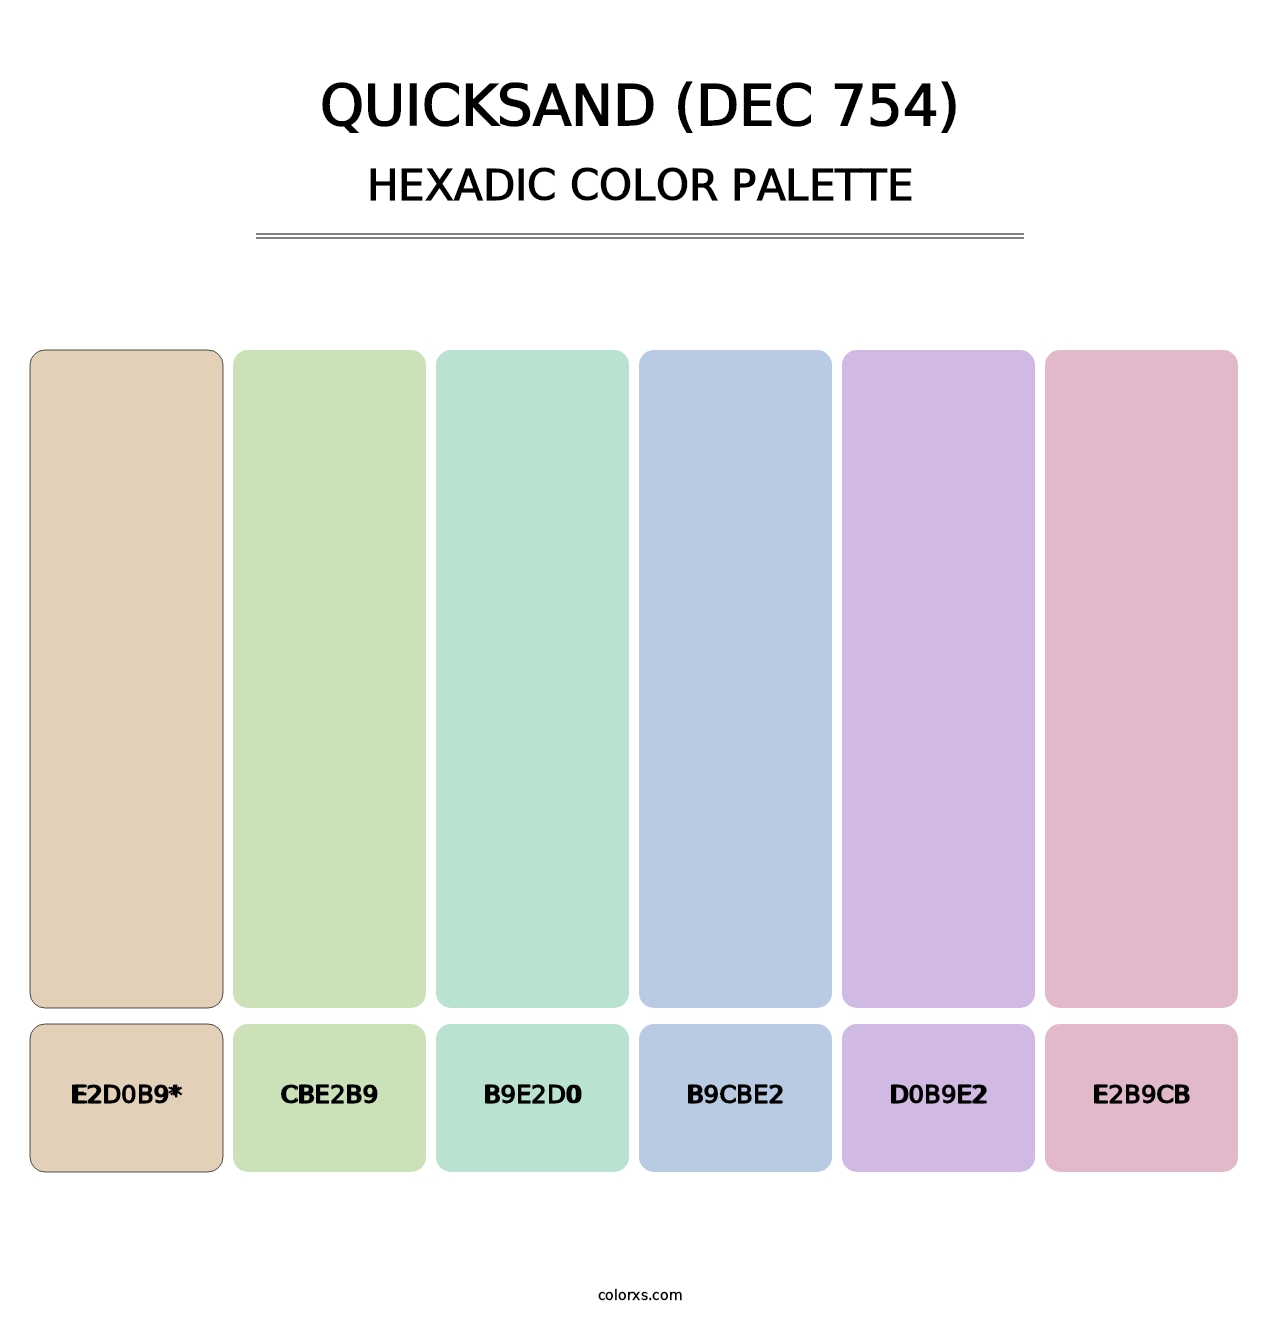 Quicksand (DEC 754) - Hexadic Color Palette